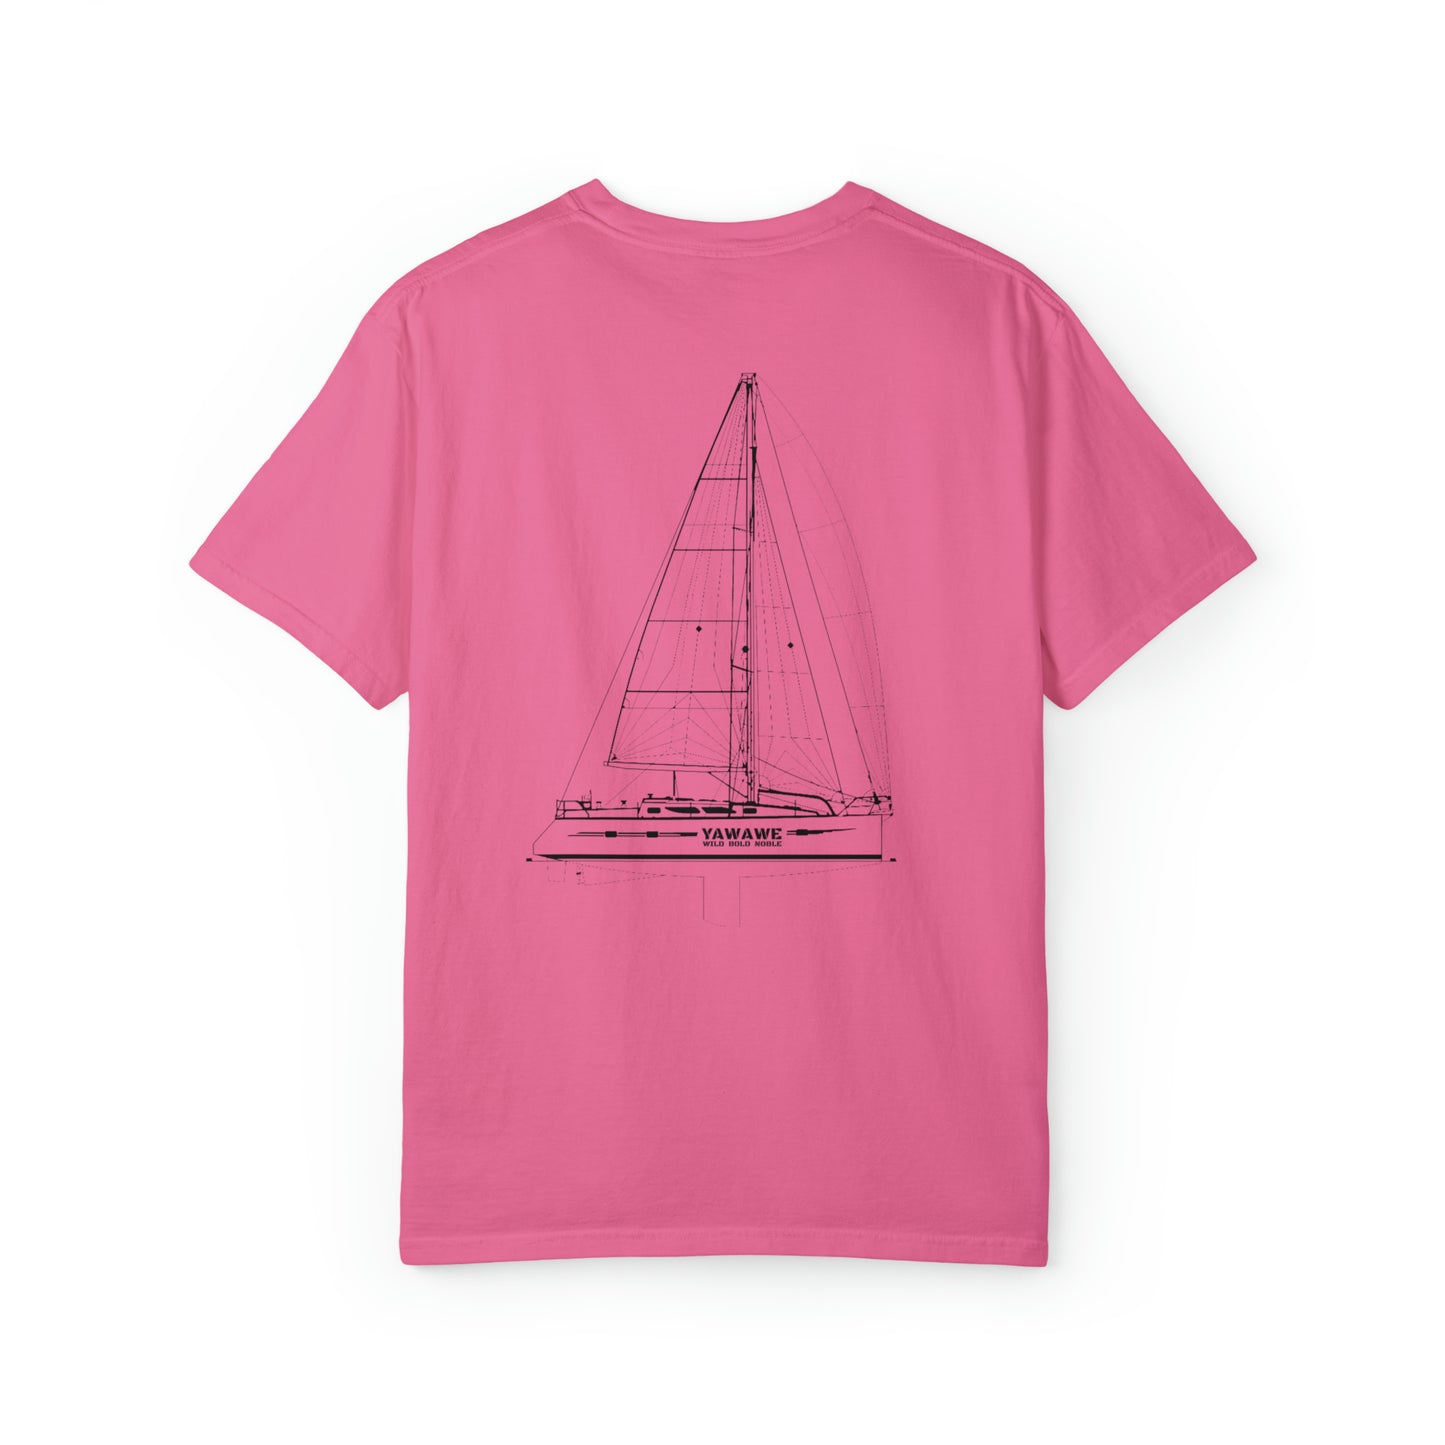 YAWAWE Yacht Pinkberry Tee